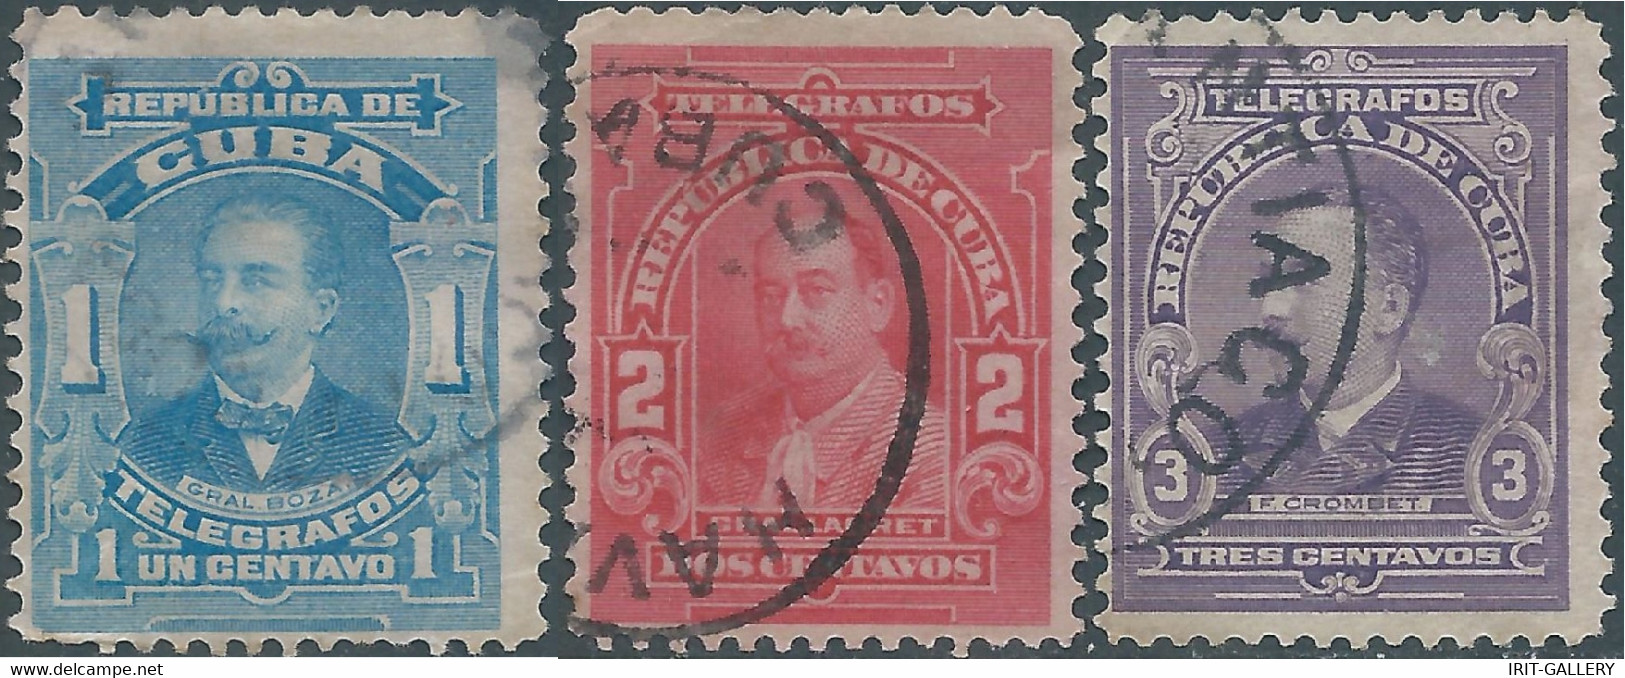 CUBA,REPUBLIC OF CUBA 1911 Telegraph - Telegrafos 1c Blue - 2c Red & 3c Deep Reddish Violet,Obliterated - Telegraphenmarken